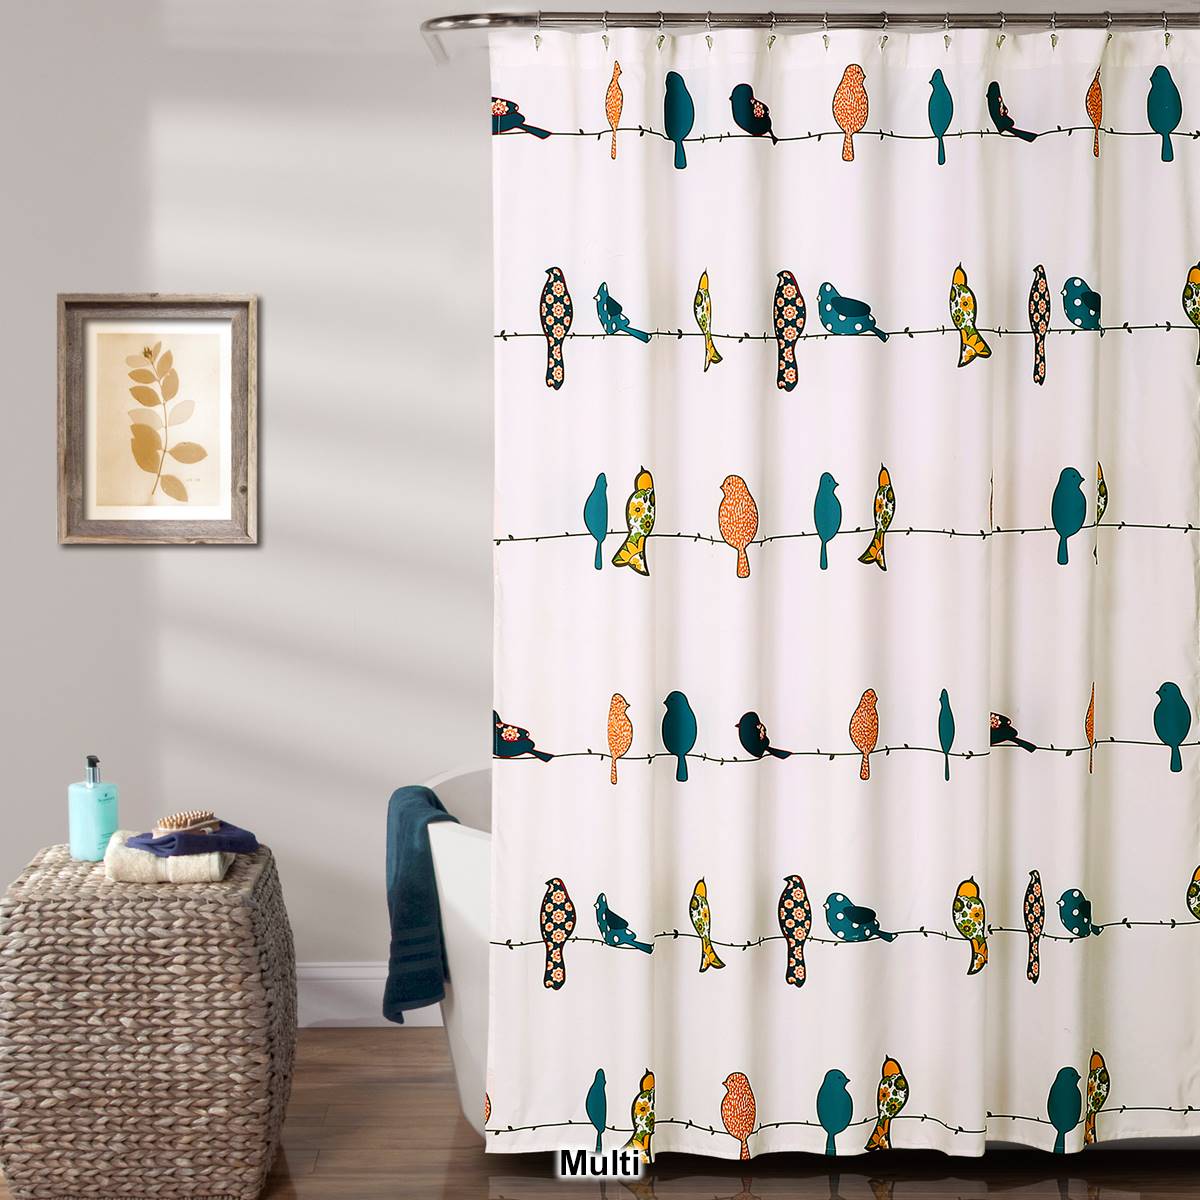 Lush Decor(R) Rowley Birds Shower Curtain